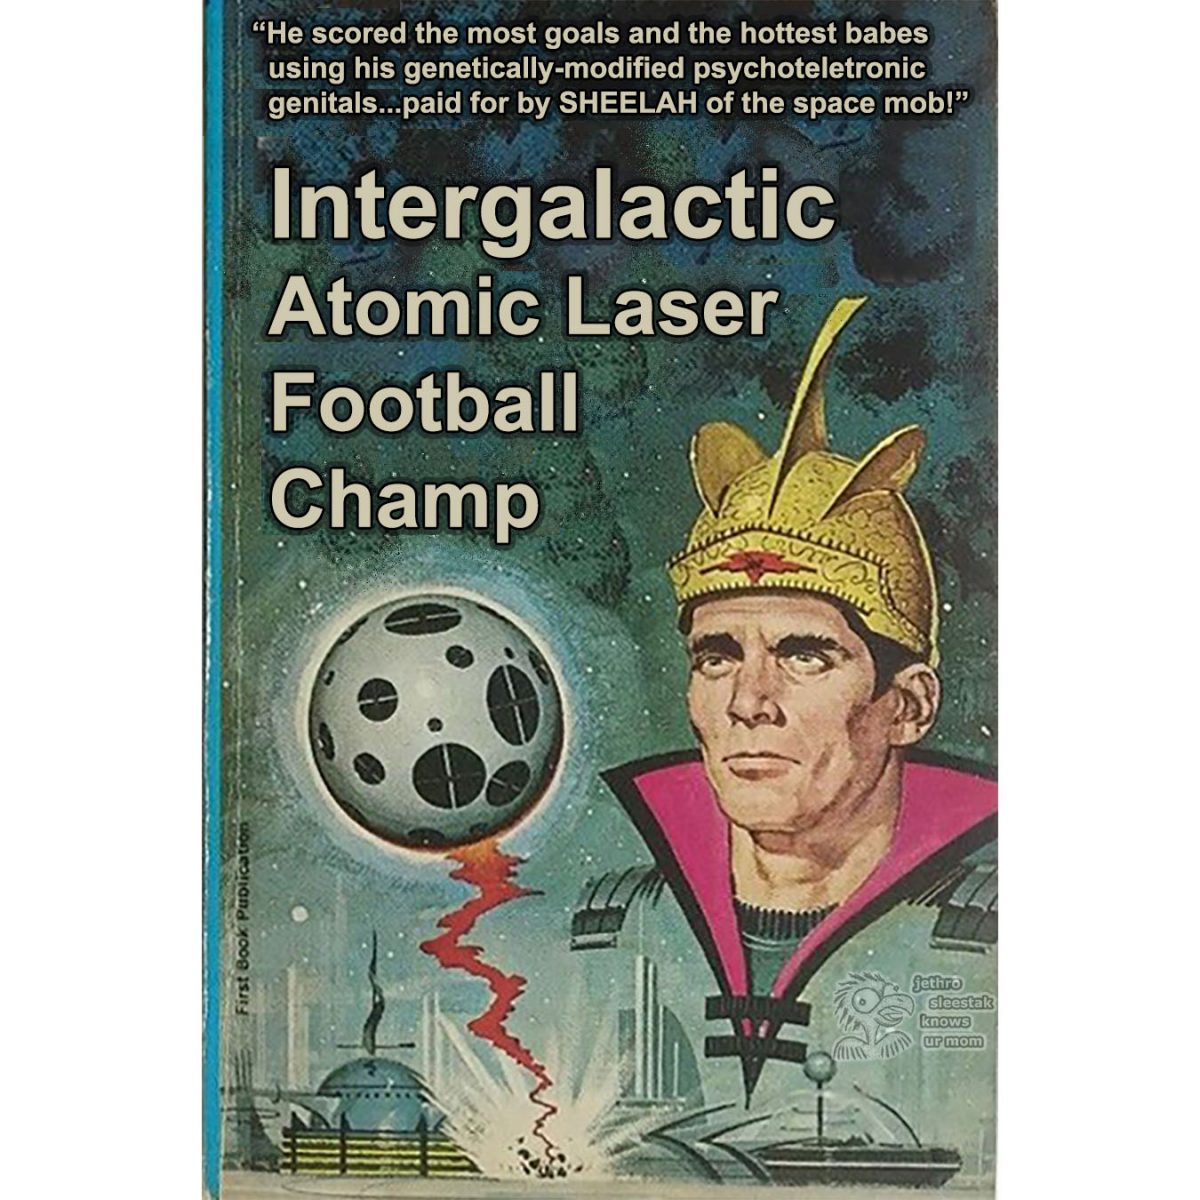 Intergalactic Atomic Laser Football Champ